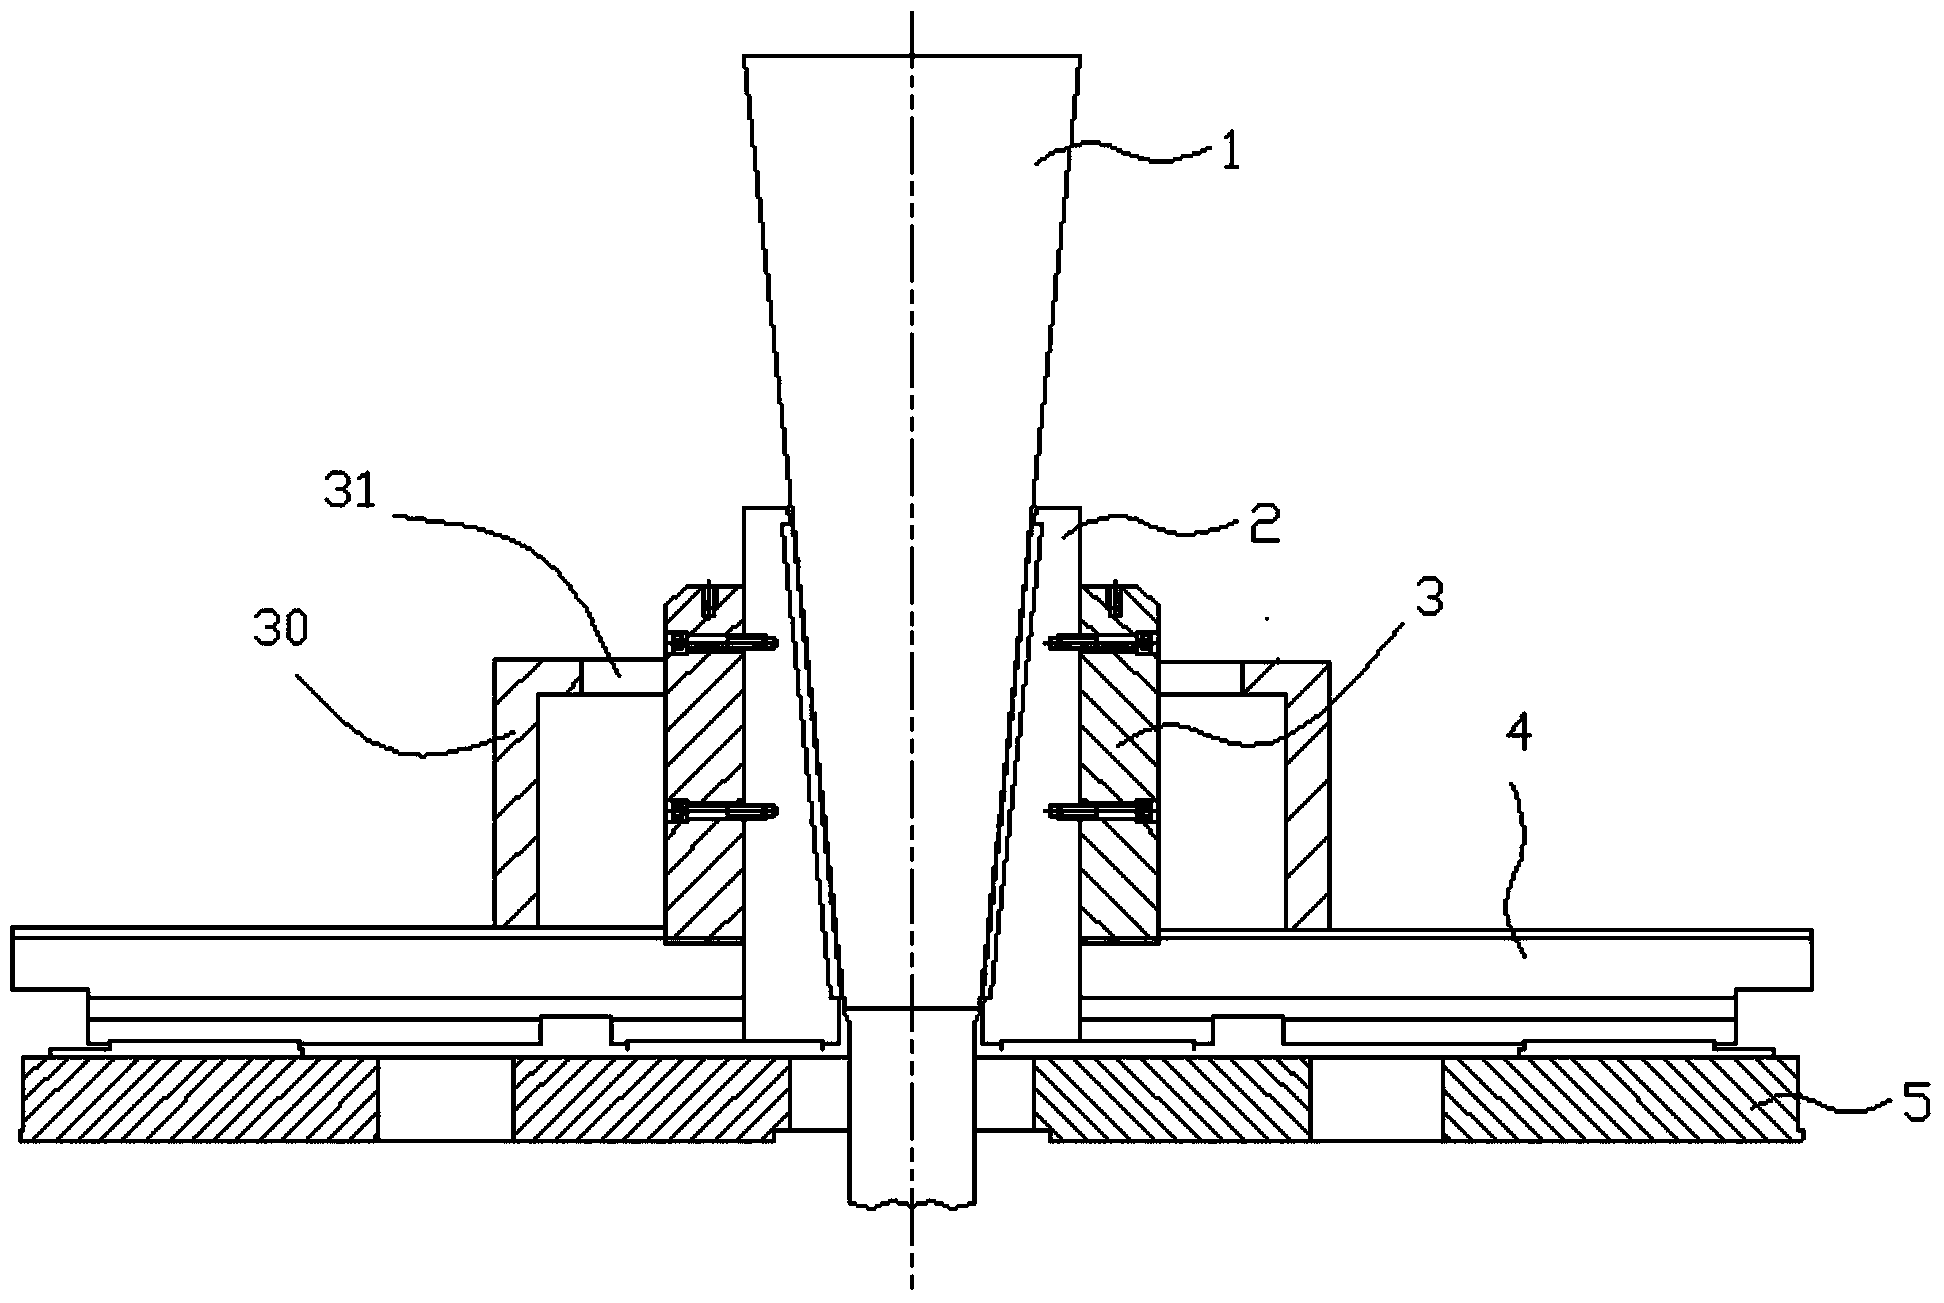 Heat bulging forming method for stainless steel rectangular cross section annular elements